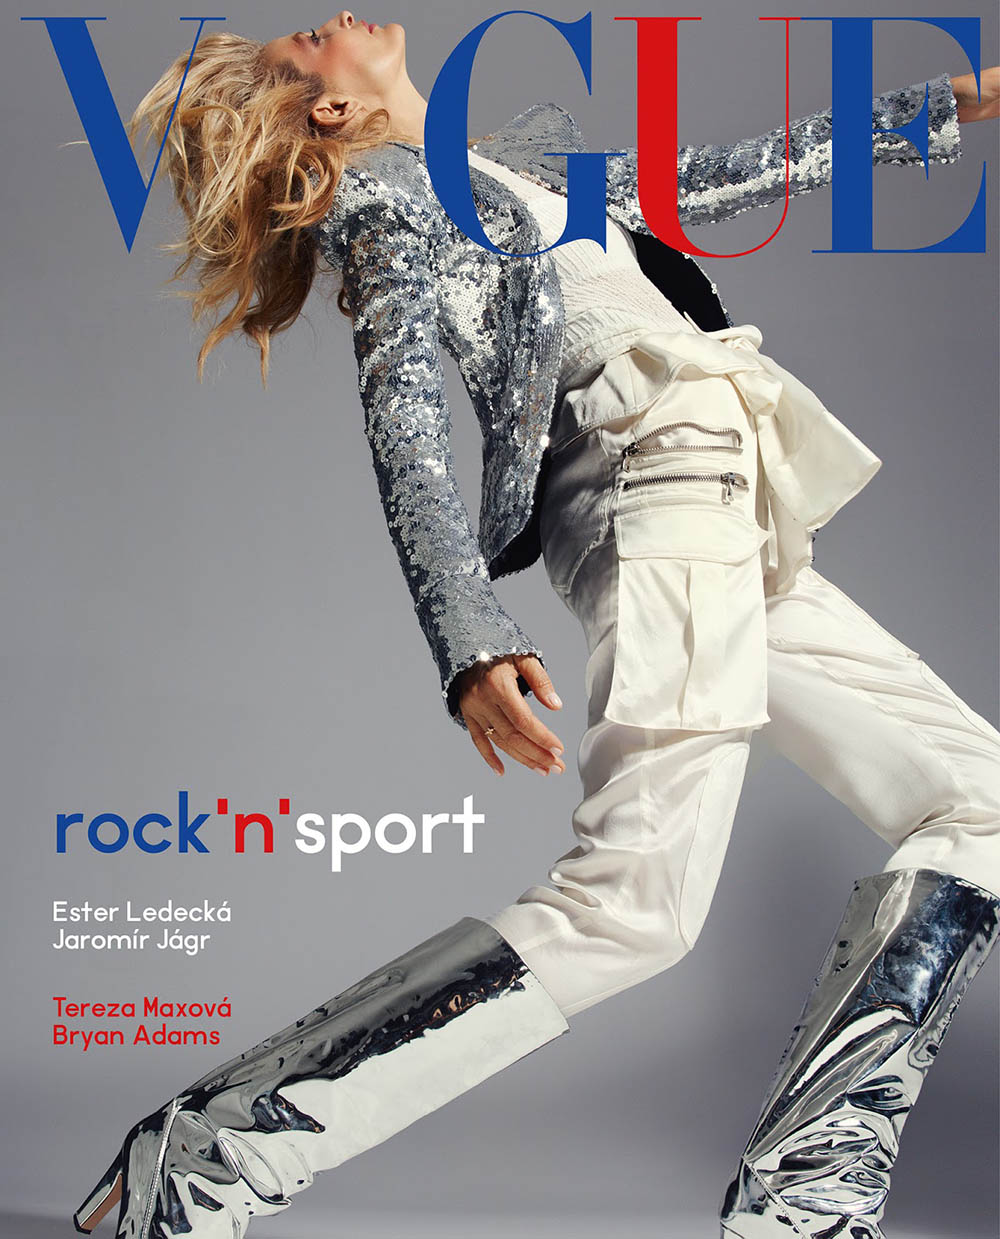 Tereza Maxova covers Vogue Czechoslovakia August 2019 by Bryan Adams